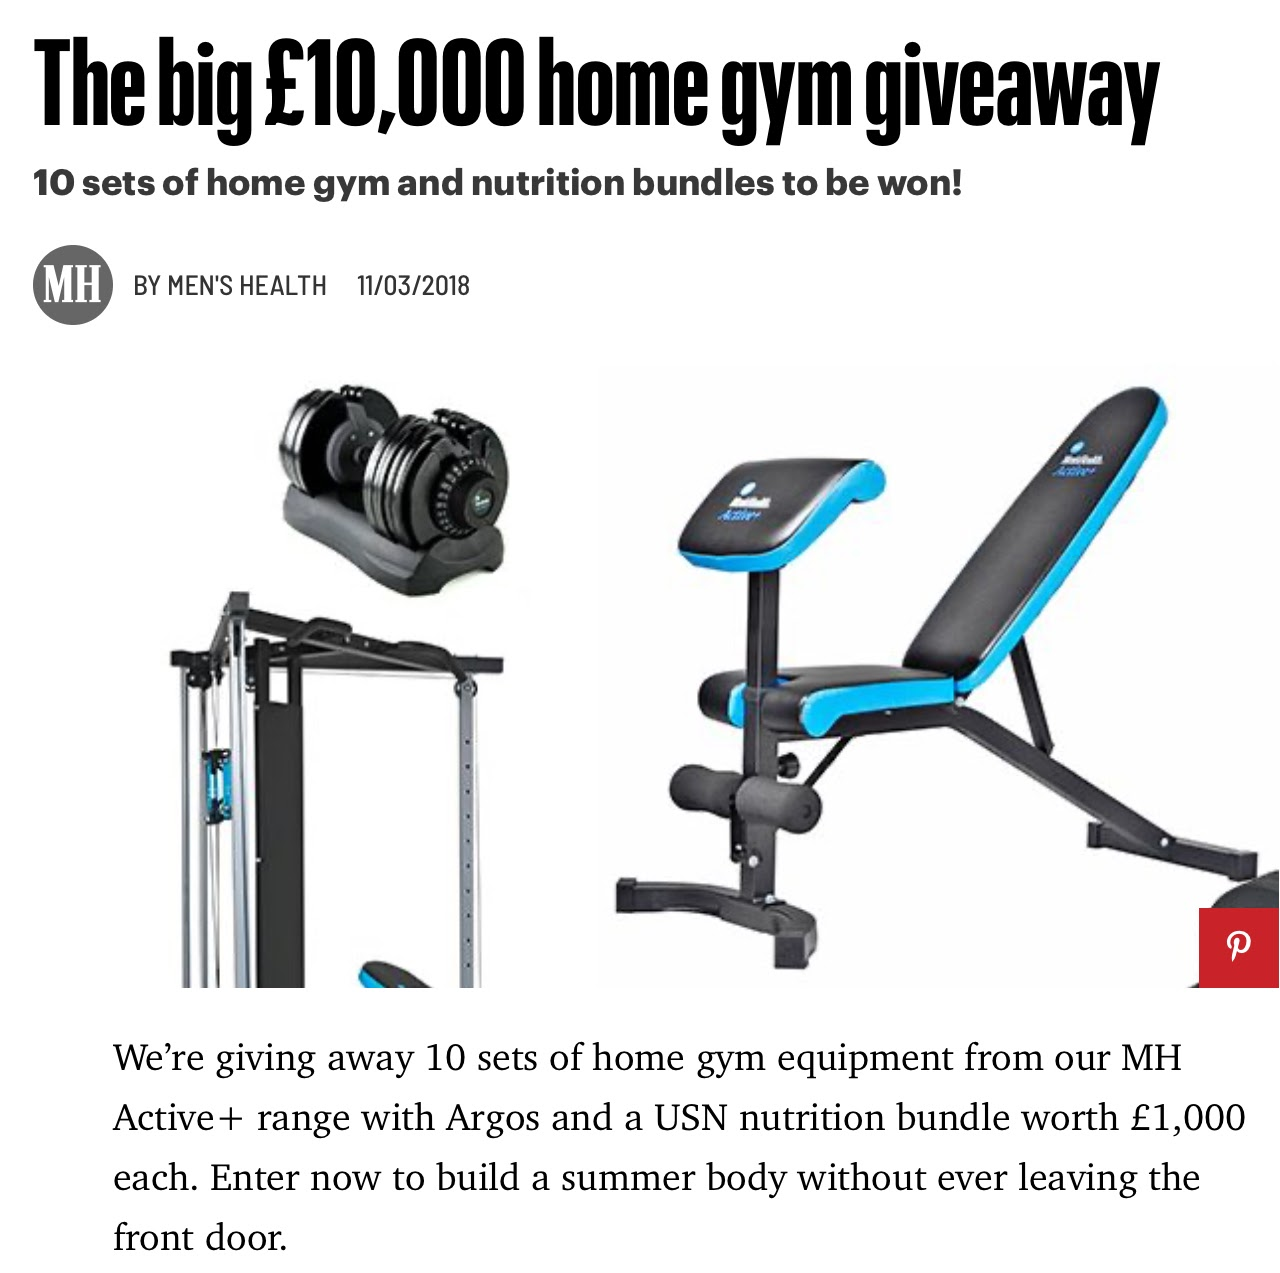 Home gym contest organized by Men's Health magazine.